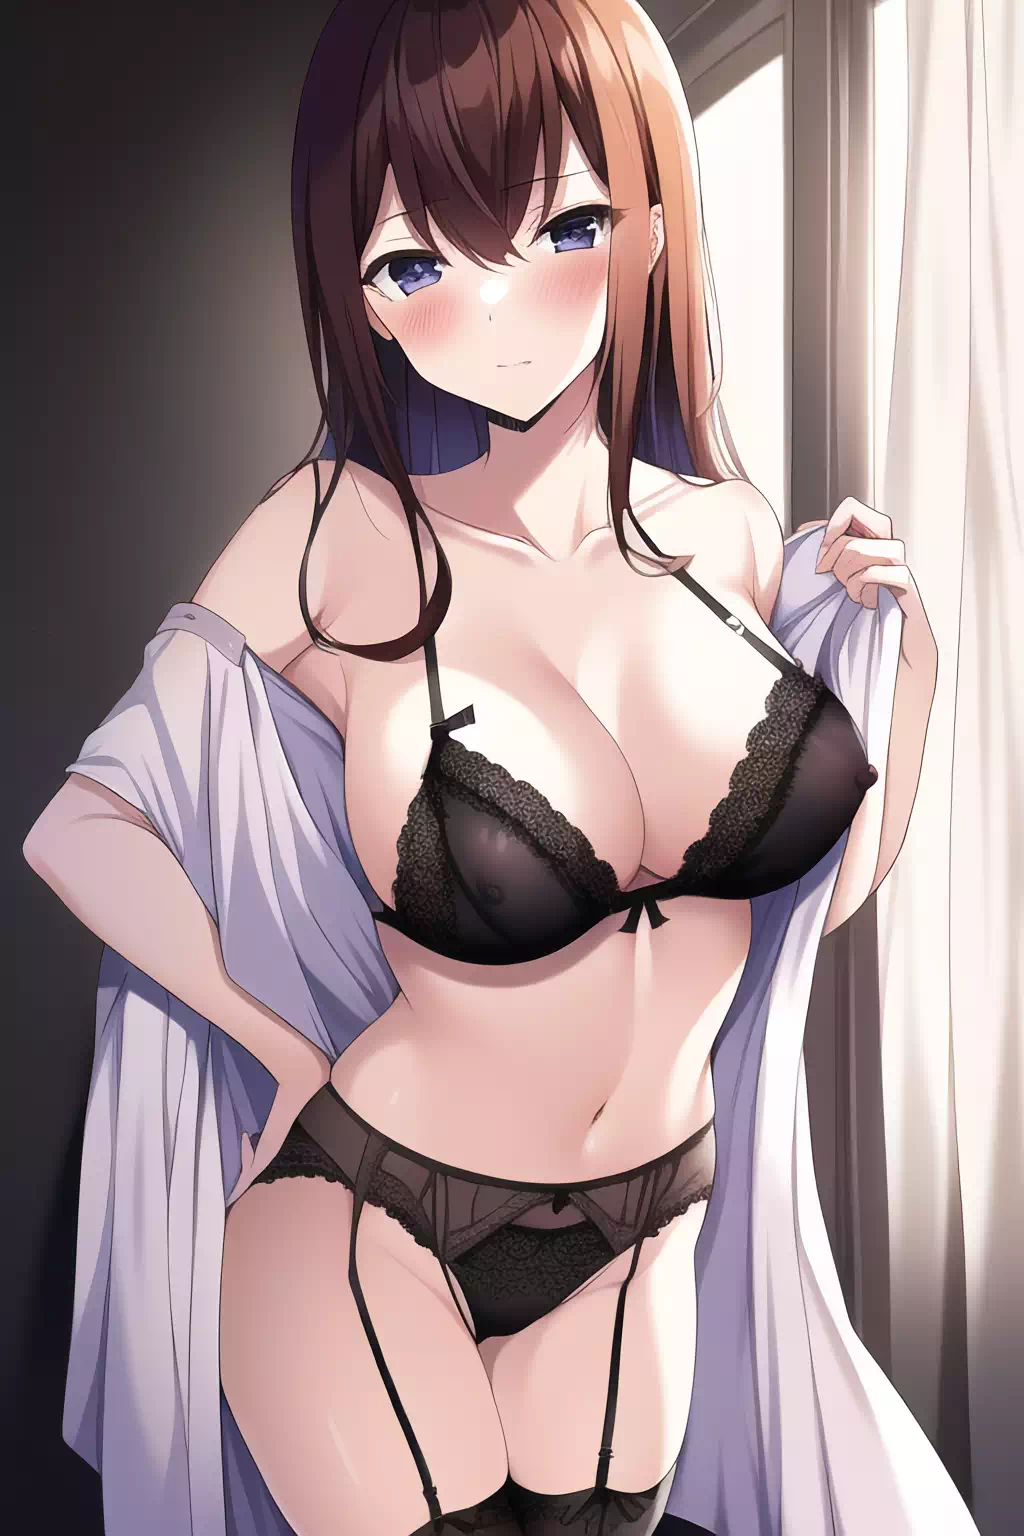 Kurisu wearing sexy lingerie (AI